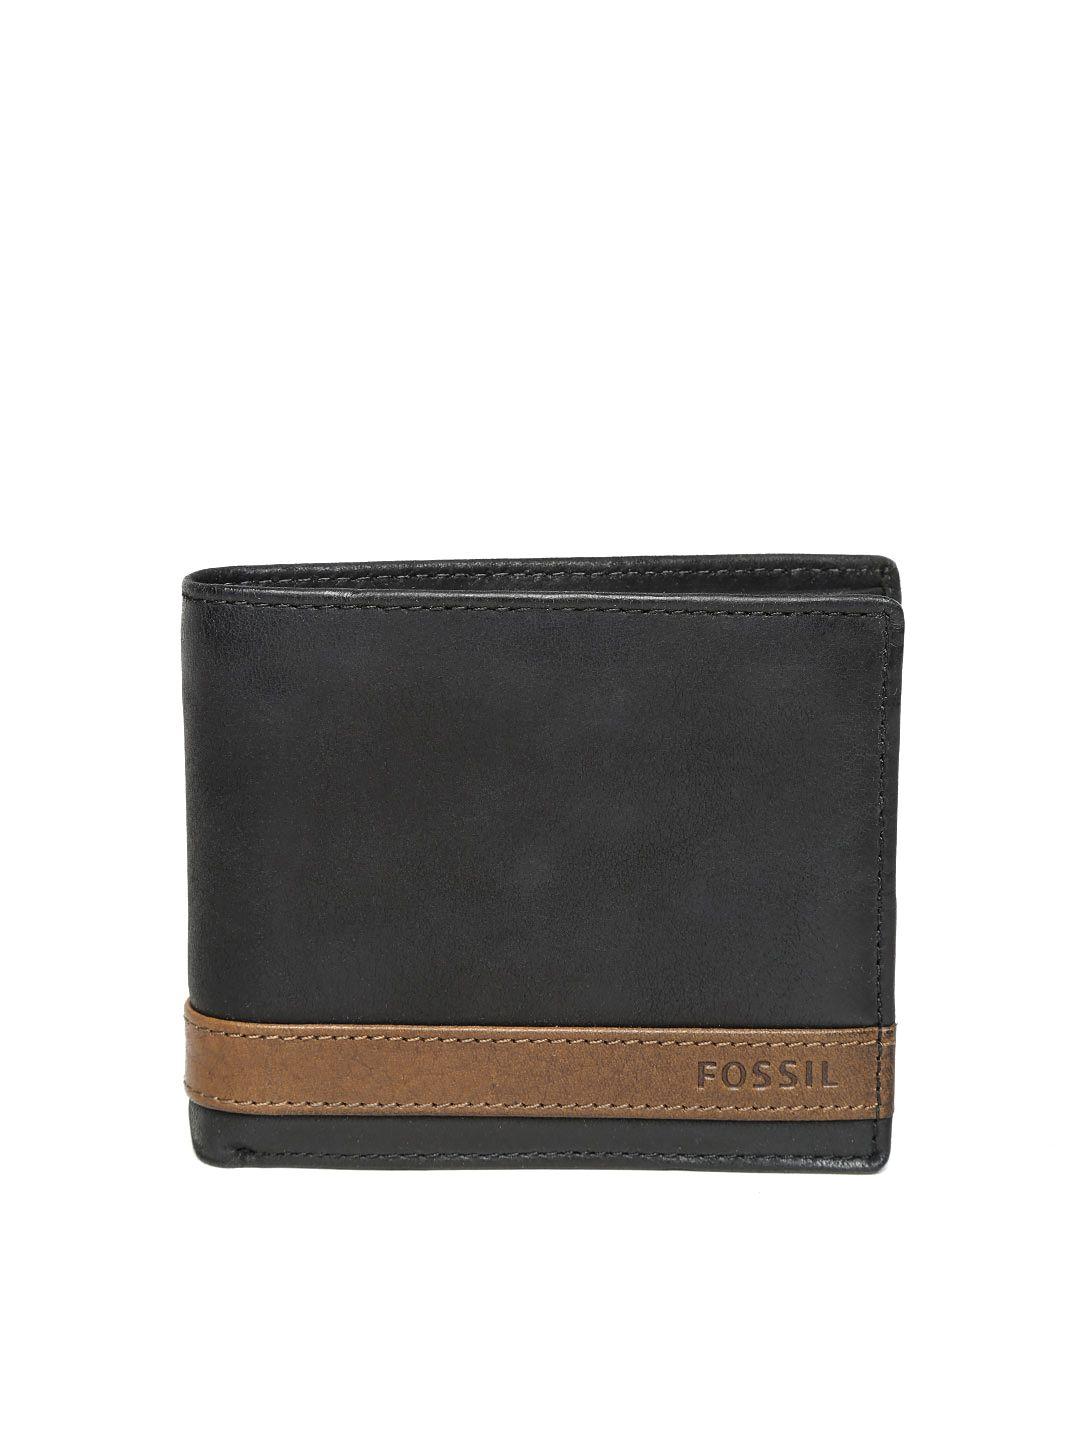 fossil men black genuine leather wallet